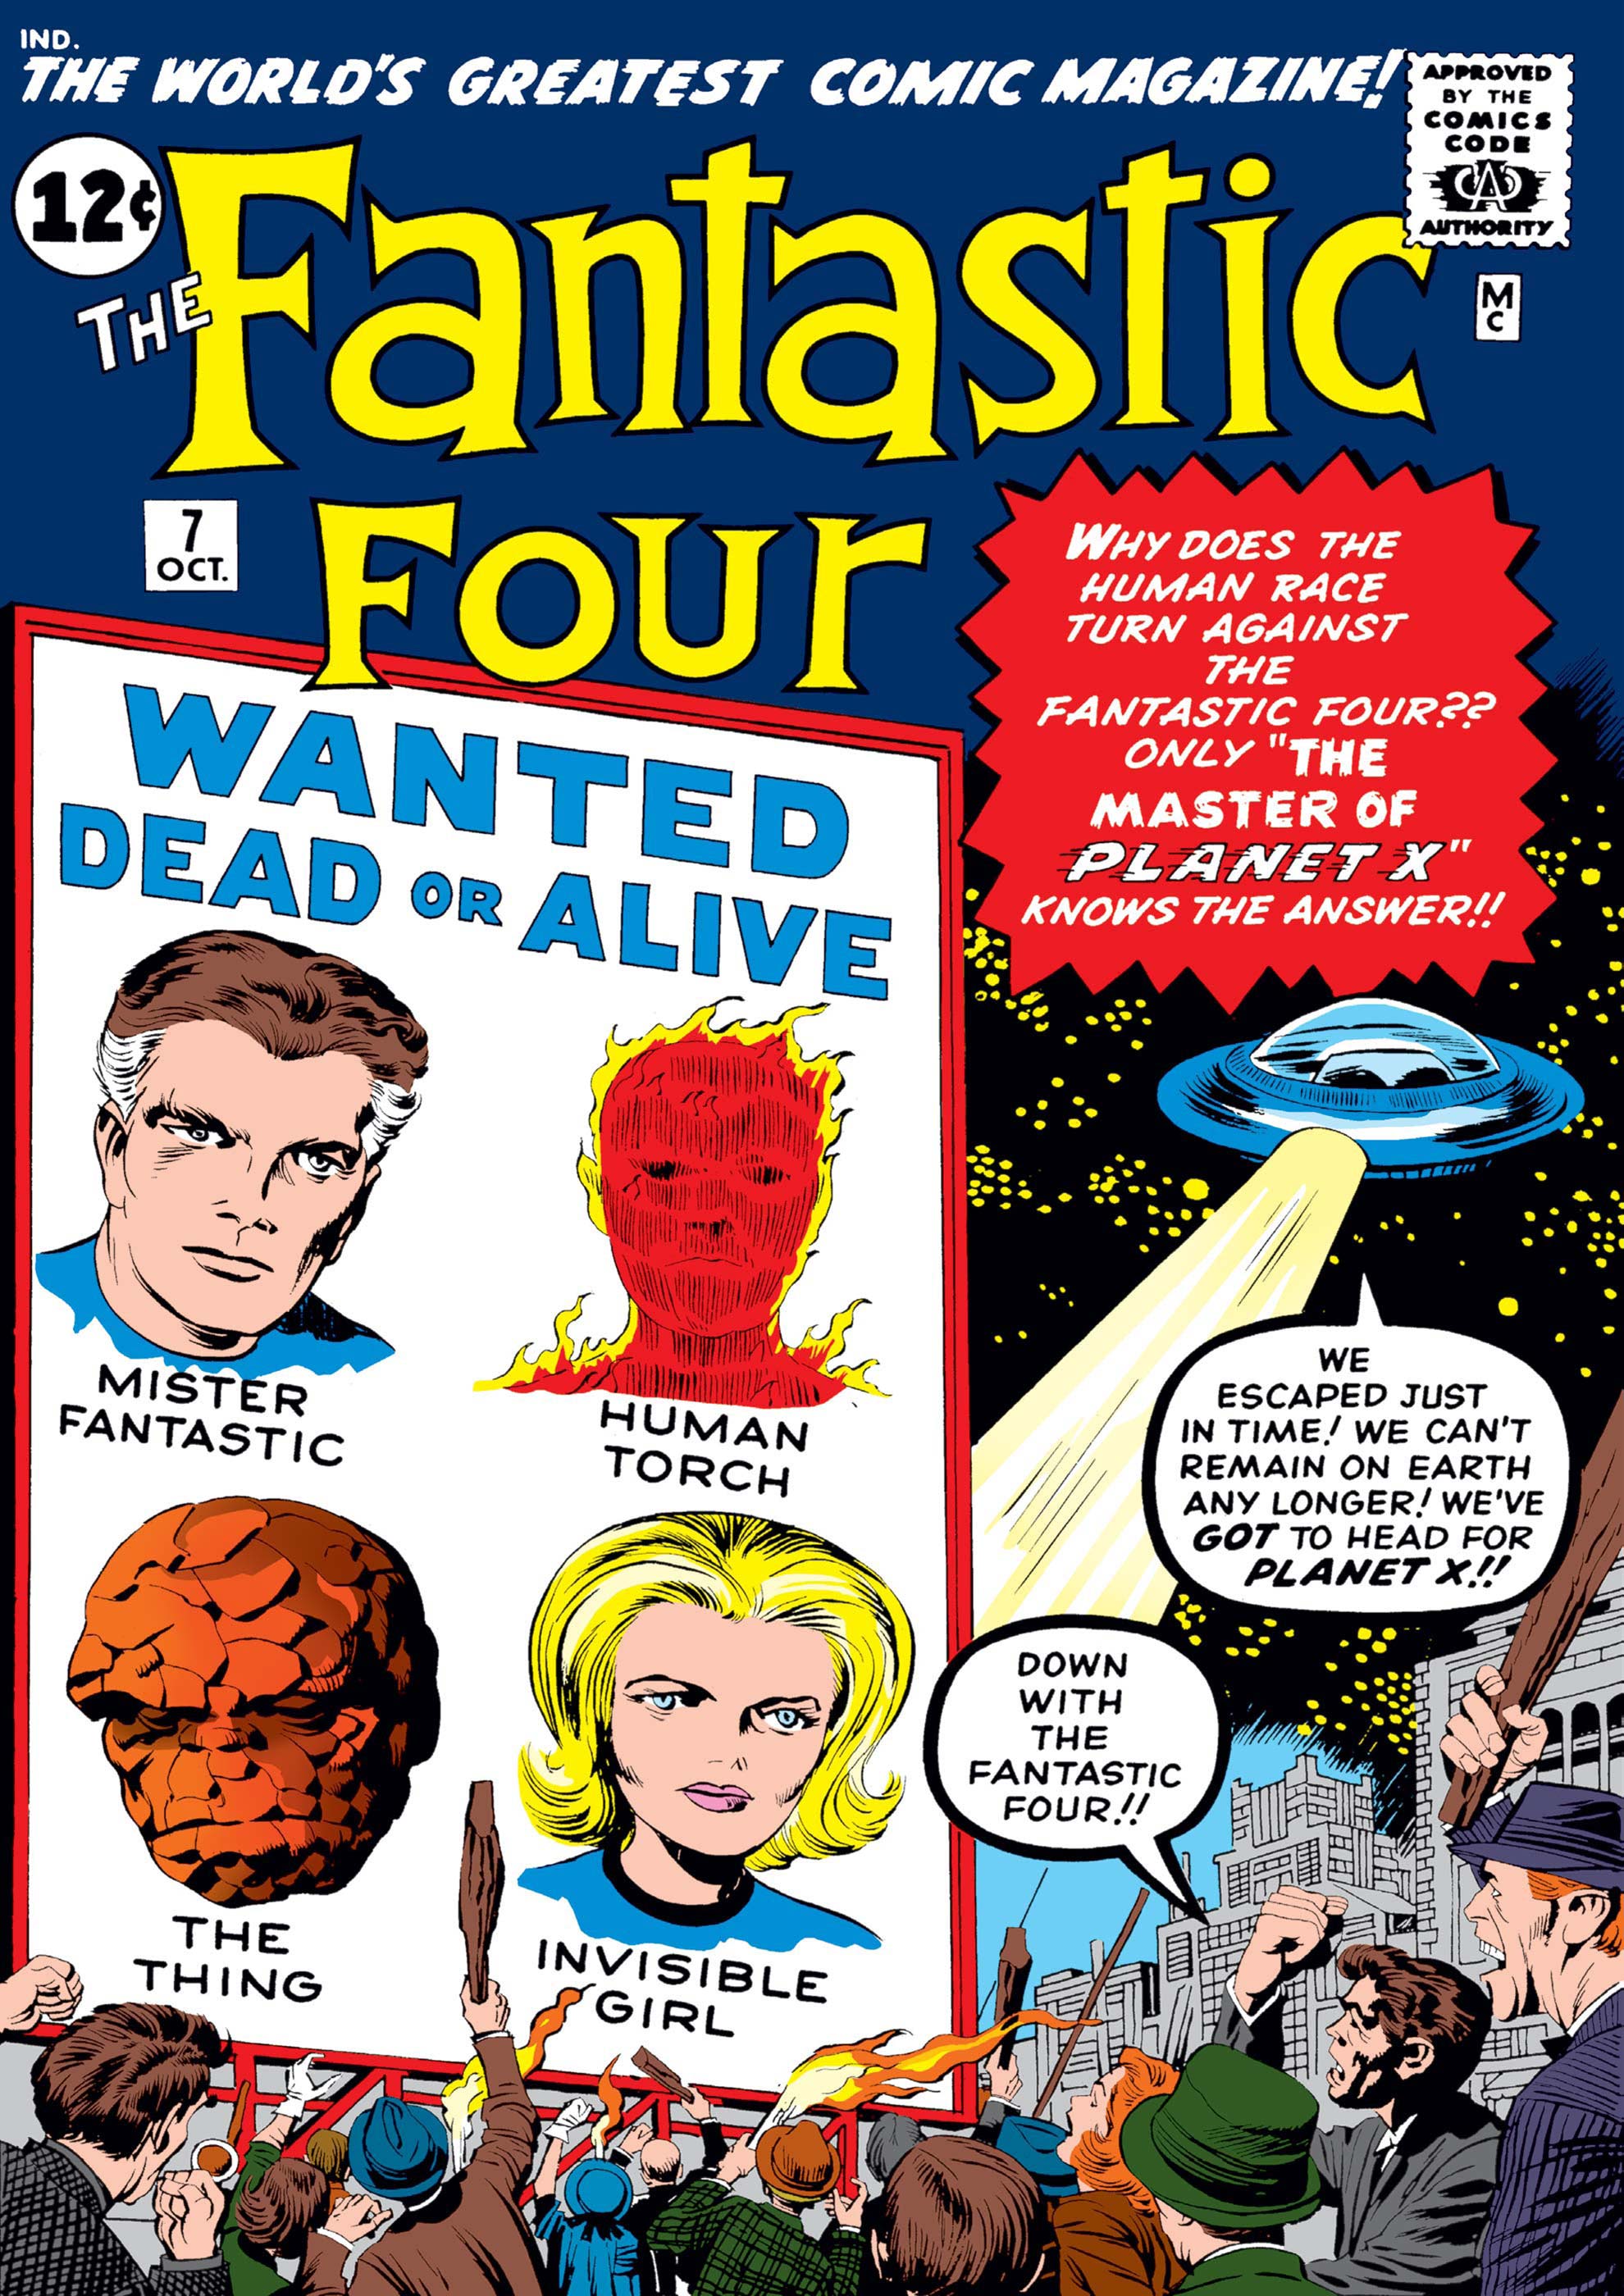 Fantastic Four (1961) #7